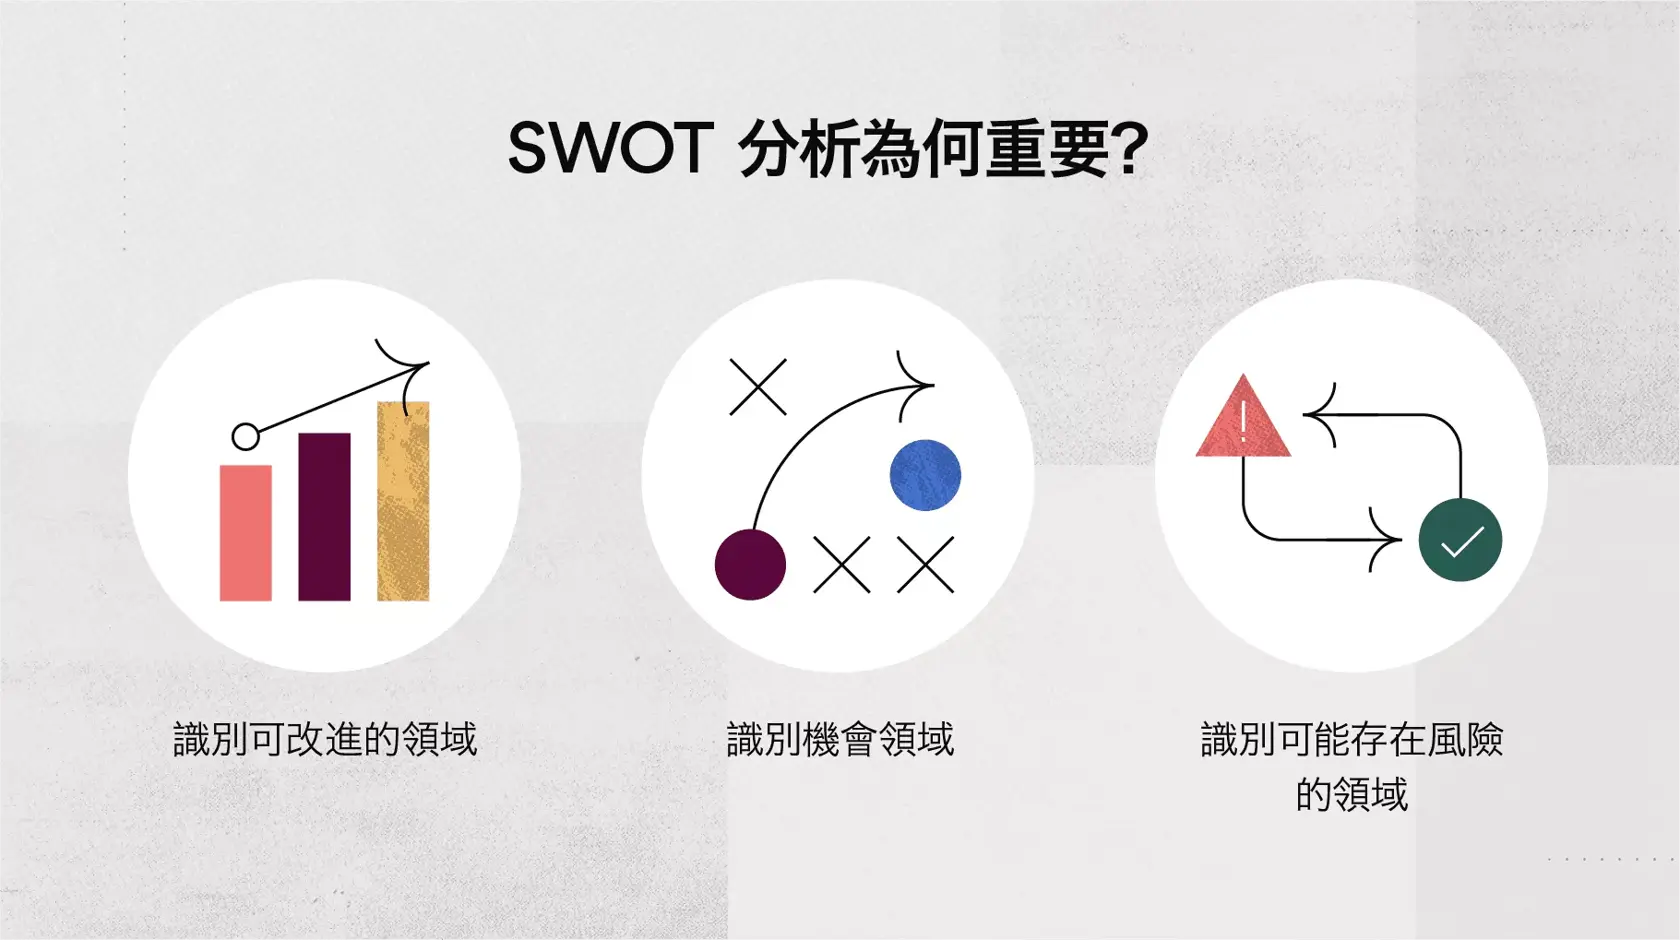 SWOT 分析為何重要？